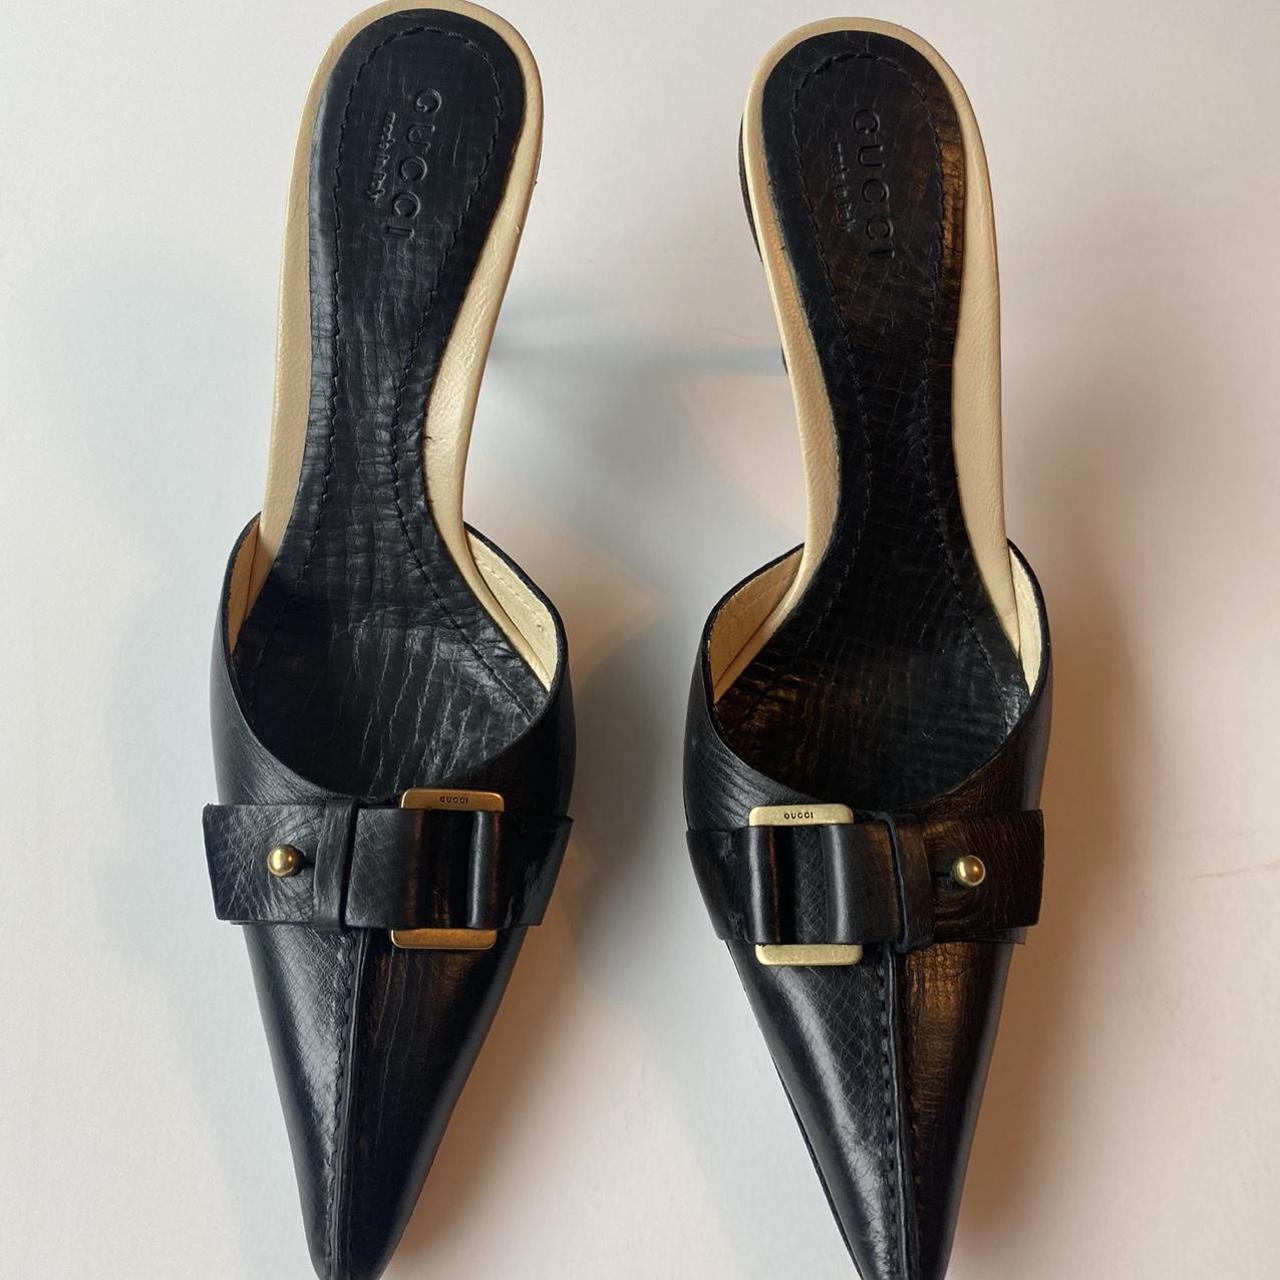 vintage gucci kitten heels 🖤 -size: 4 🧸 - Gucci... - Depop